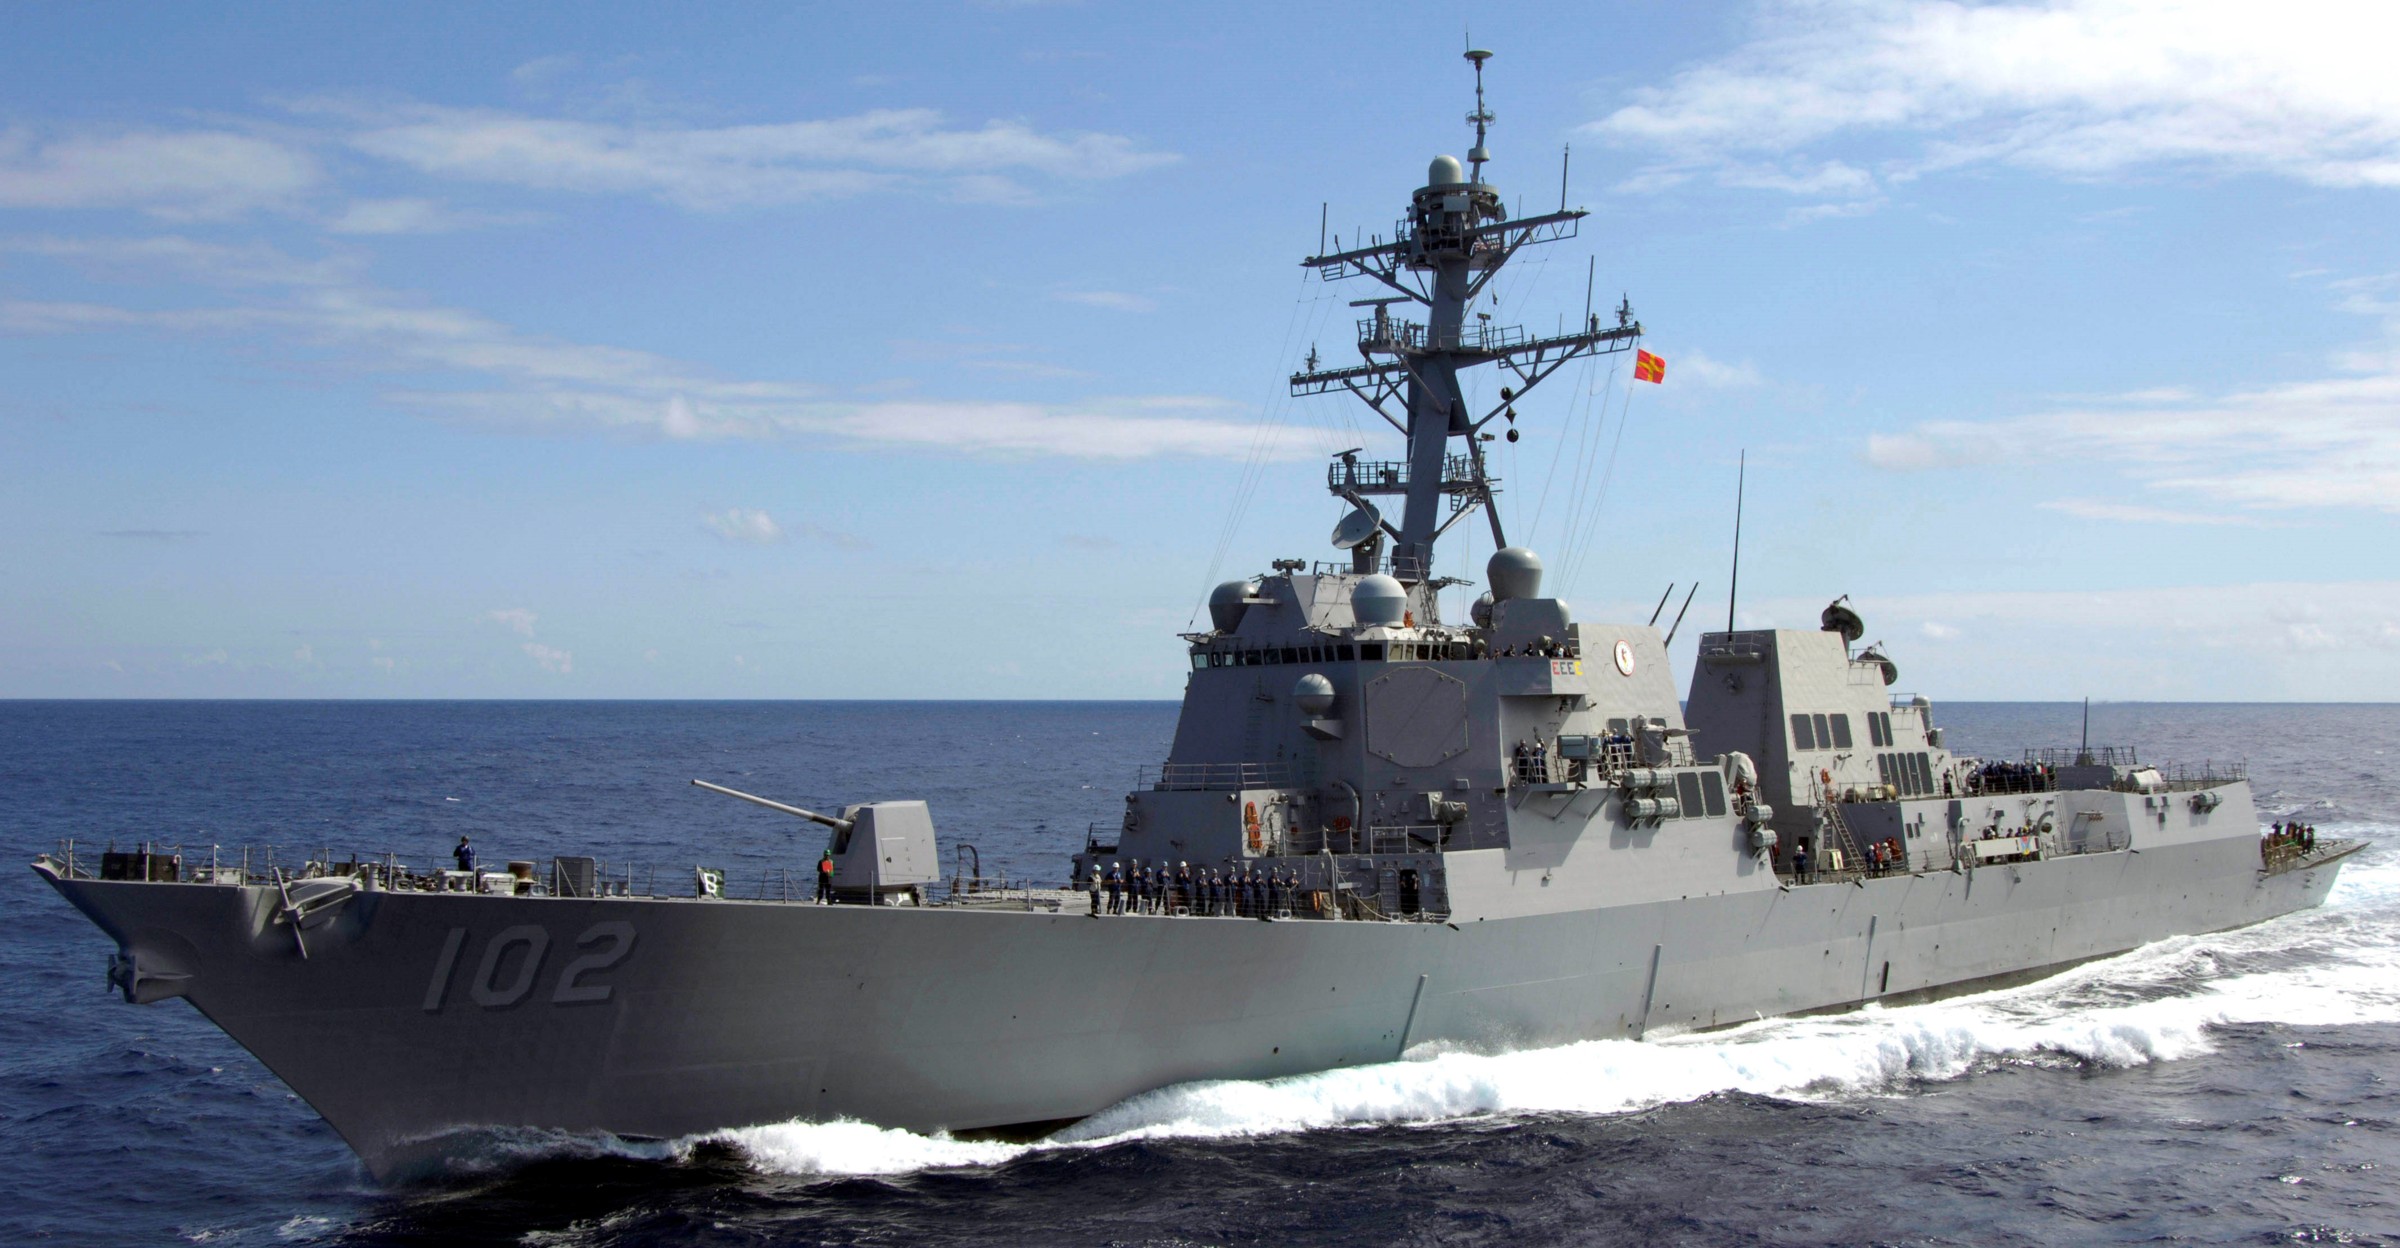 ddg-102 uss sampson arleigh burke class guided missile destroyer aegis us navy 49